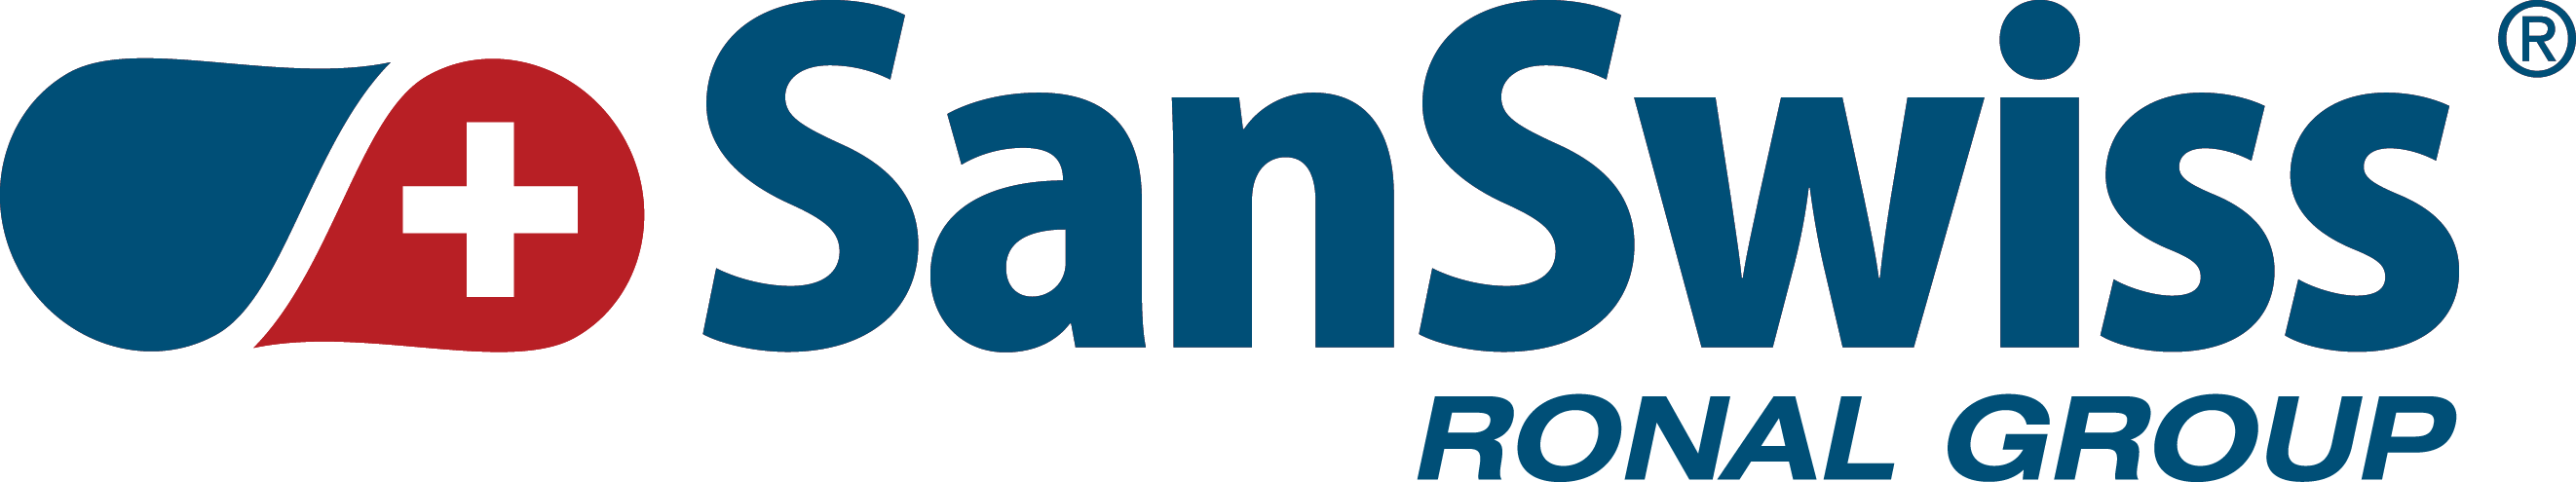 sanswiss-logo